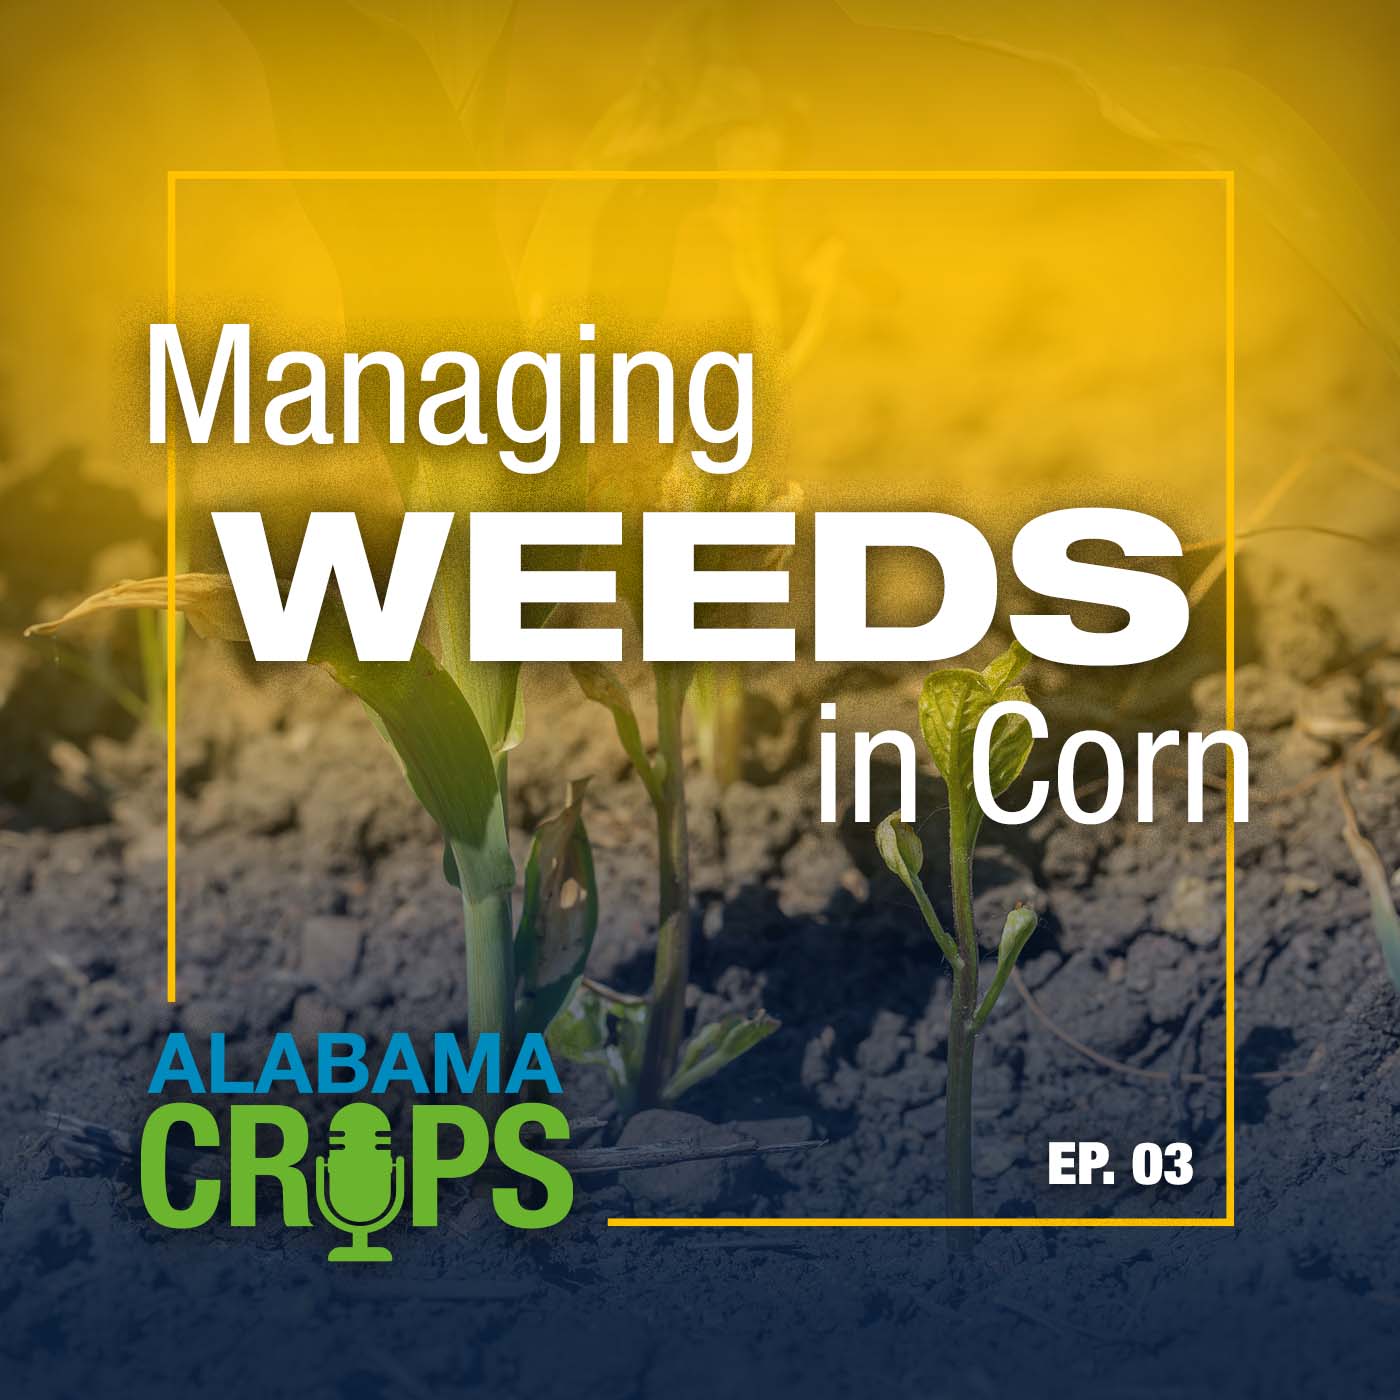 Managing Weeds in Corn - Alabama Crops EP.03